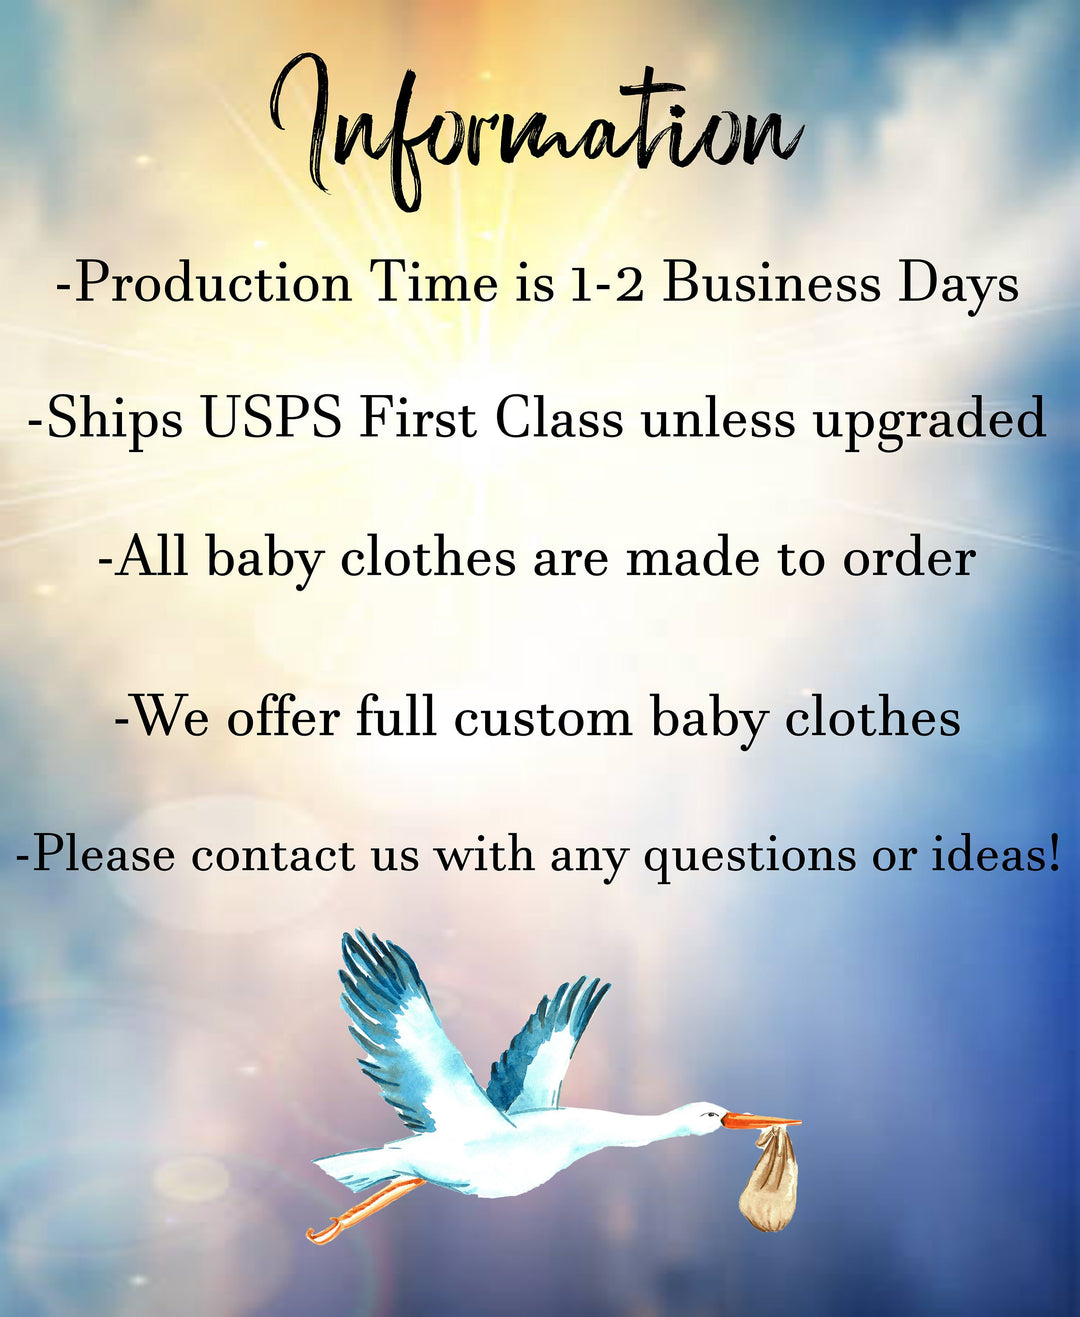 Let's Go Brandon - Baby Boy Girl Clothes Infant Bodysuit Funny Cute Newborn 1D